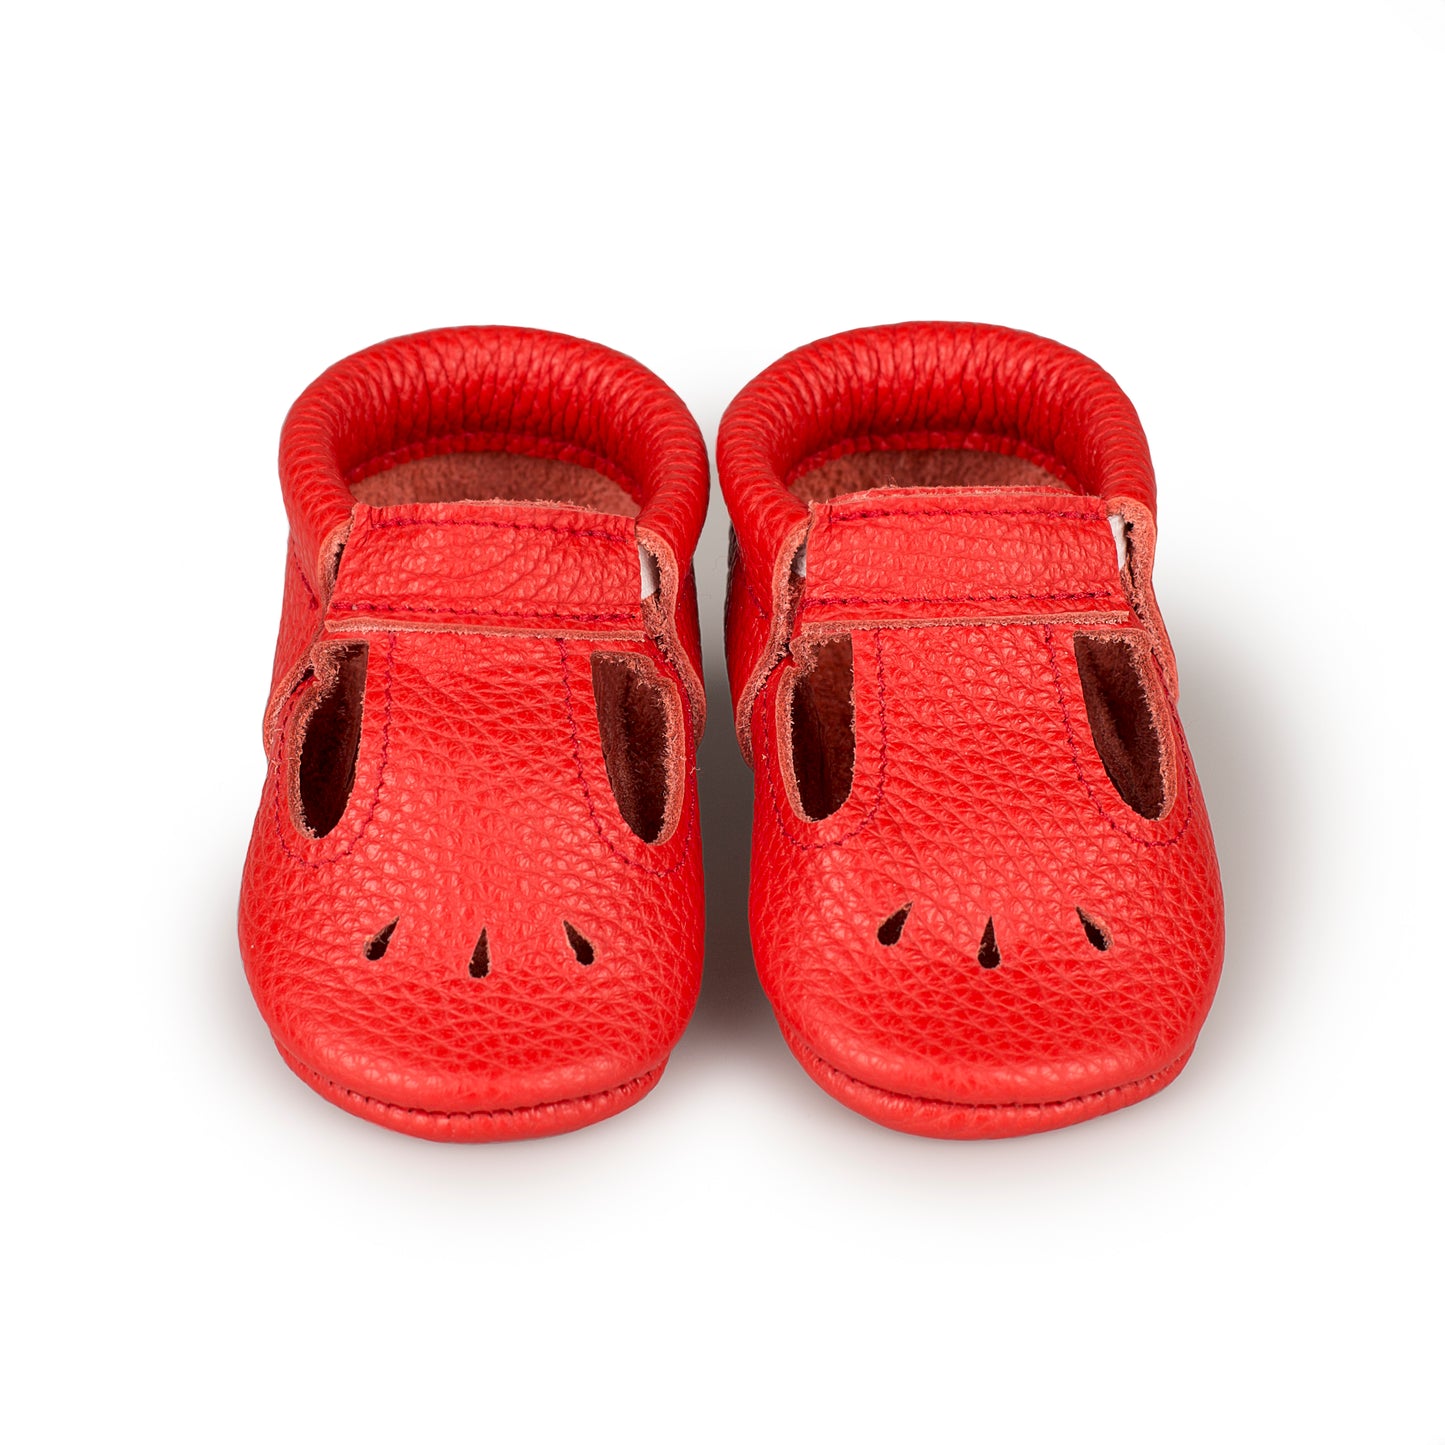 T-Strap tear-drop baby shoes